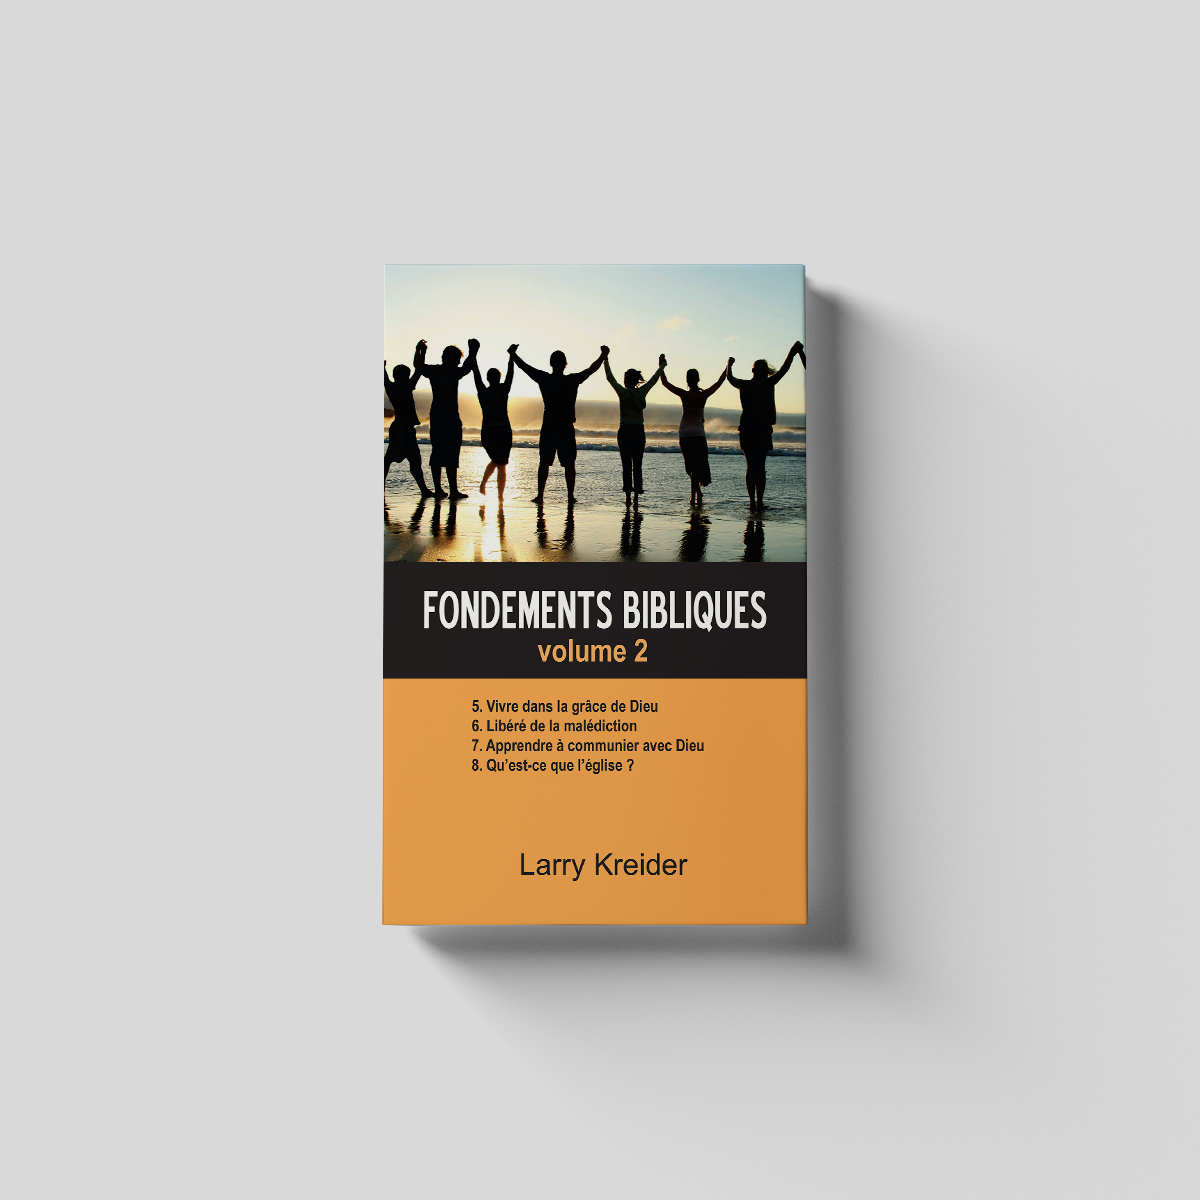 Fondements bibliques volume 2 - French